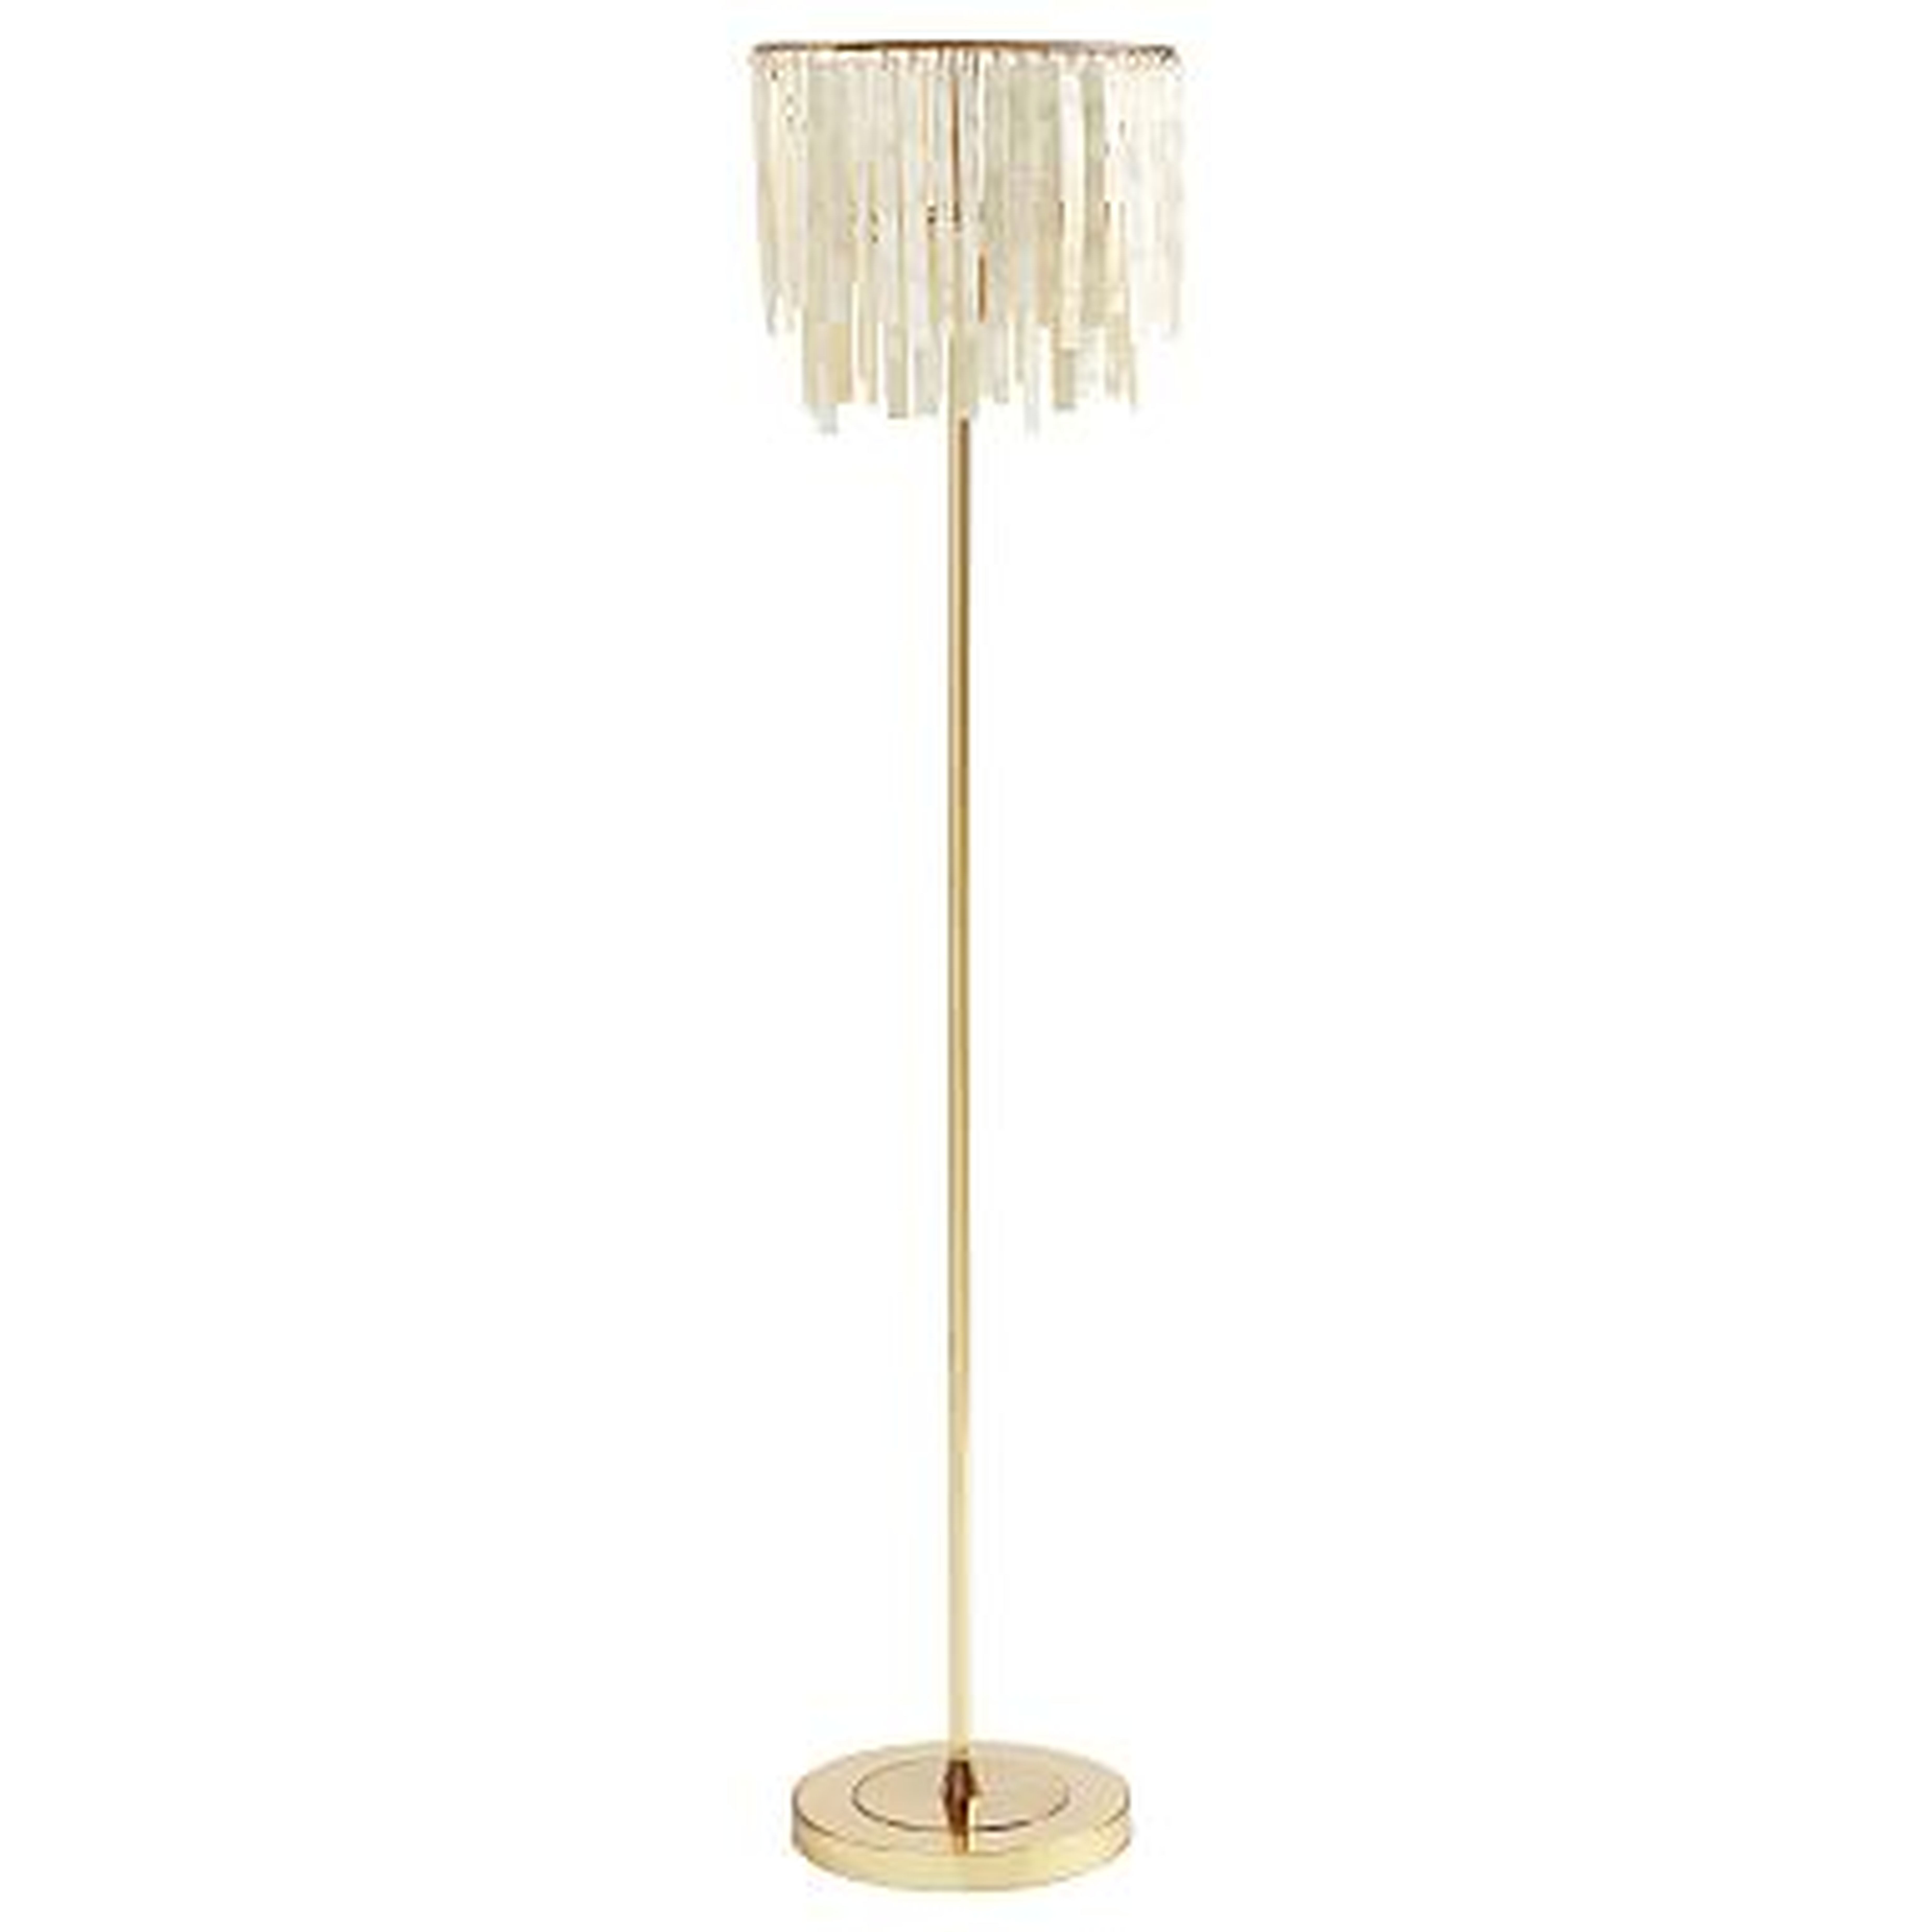 Capiz Strip Floor Lamp, Pearl/Gold - Pottery Barn Teen